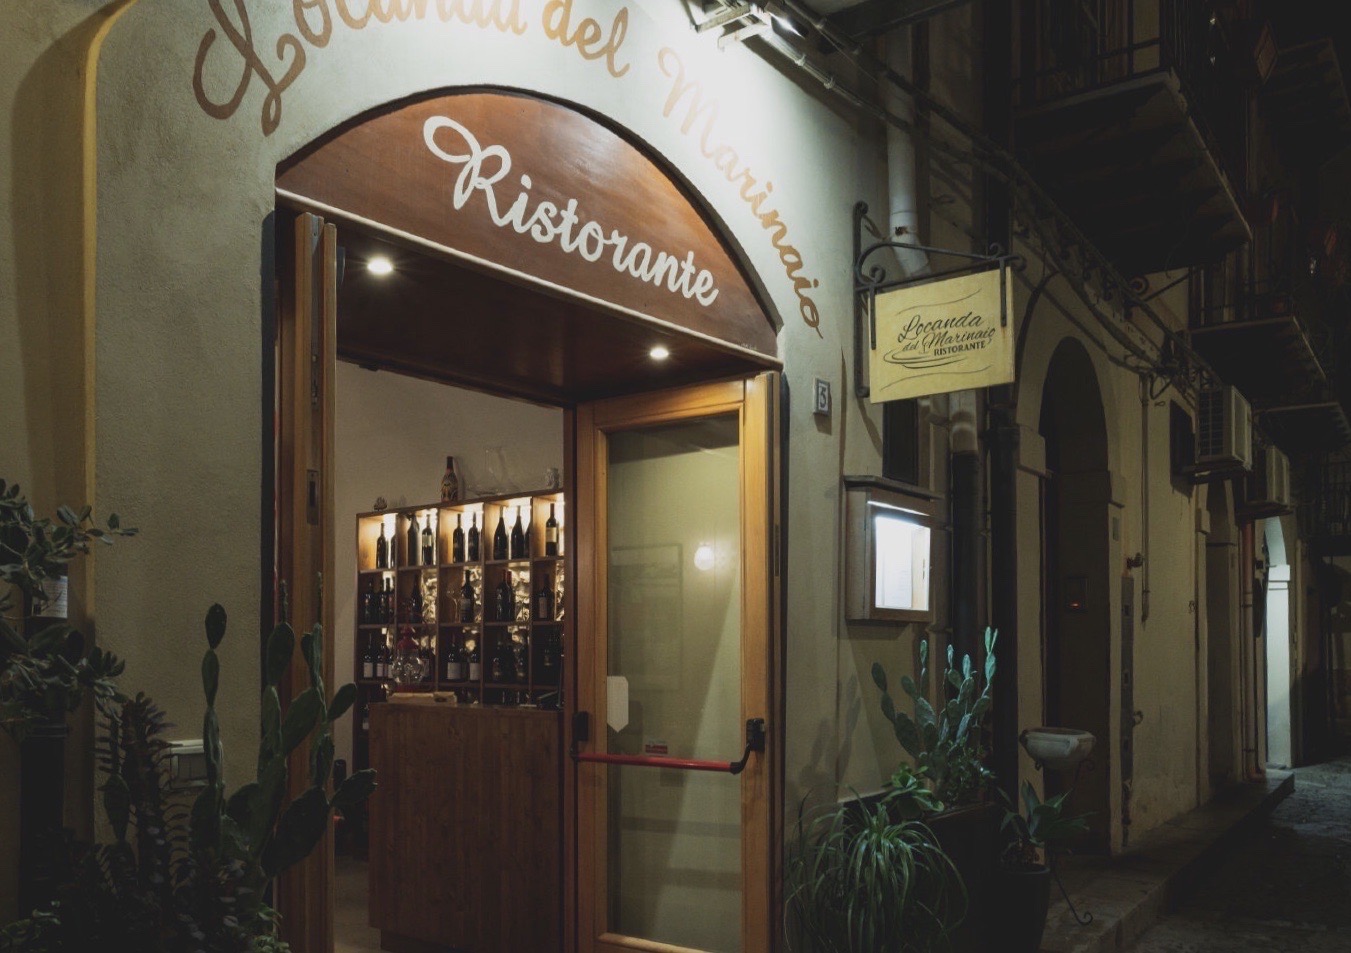 Locanda del Marinaio 海鲜料理 切法卢Cefalù 标记挺久的一家餐馆，之前从墨